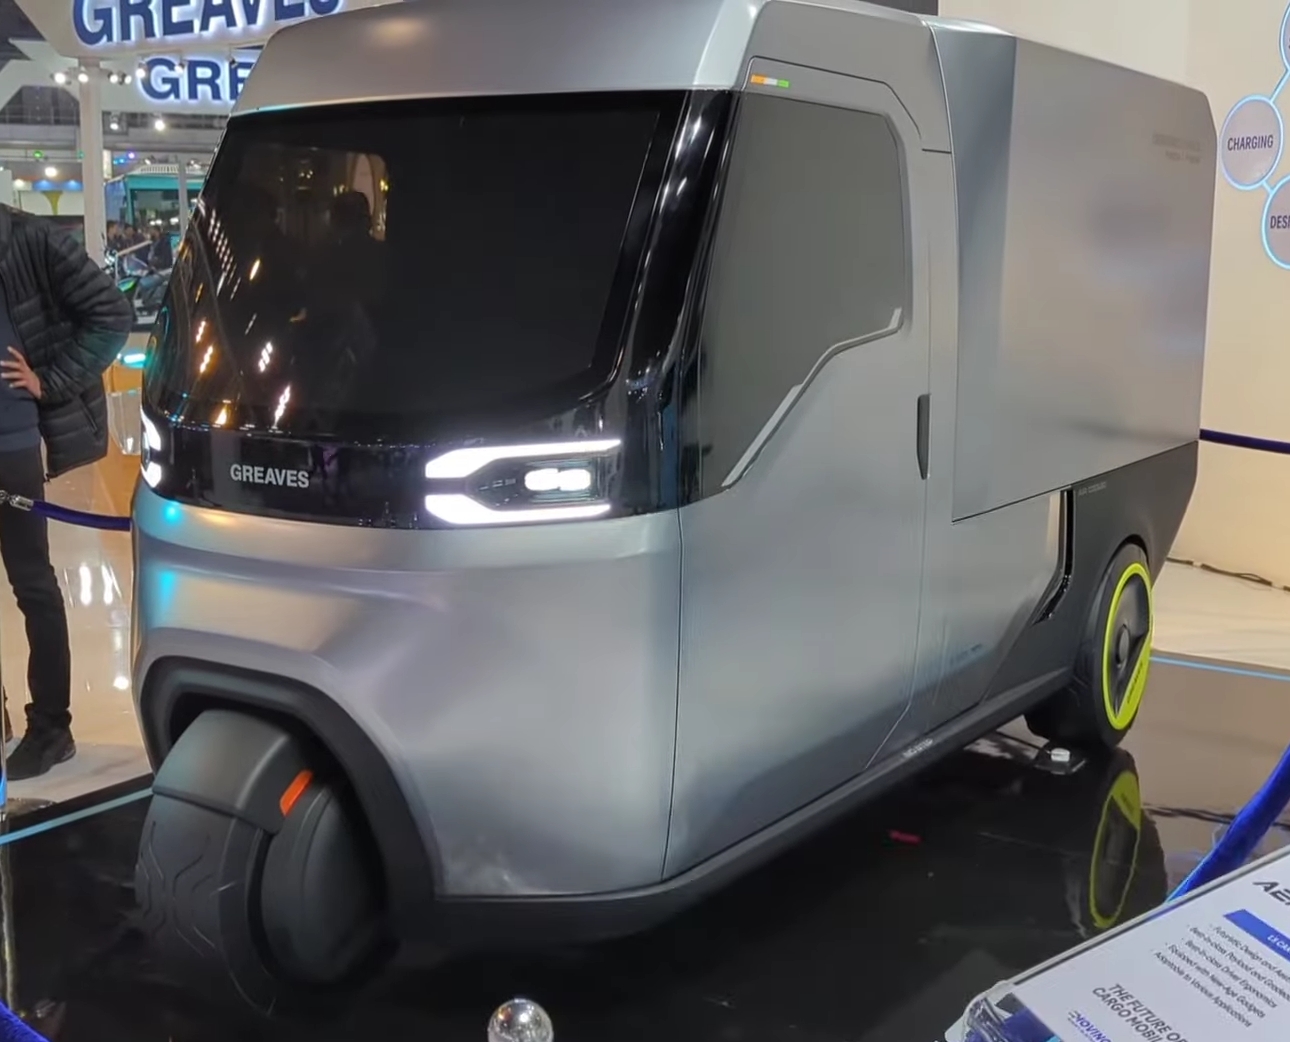 https://e-vehicleinfo.com/greaves-aero-vision-made-in-india-futuristic-electric-auto-rickshaw/